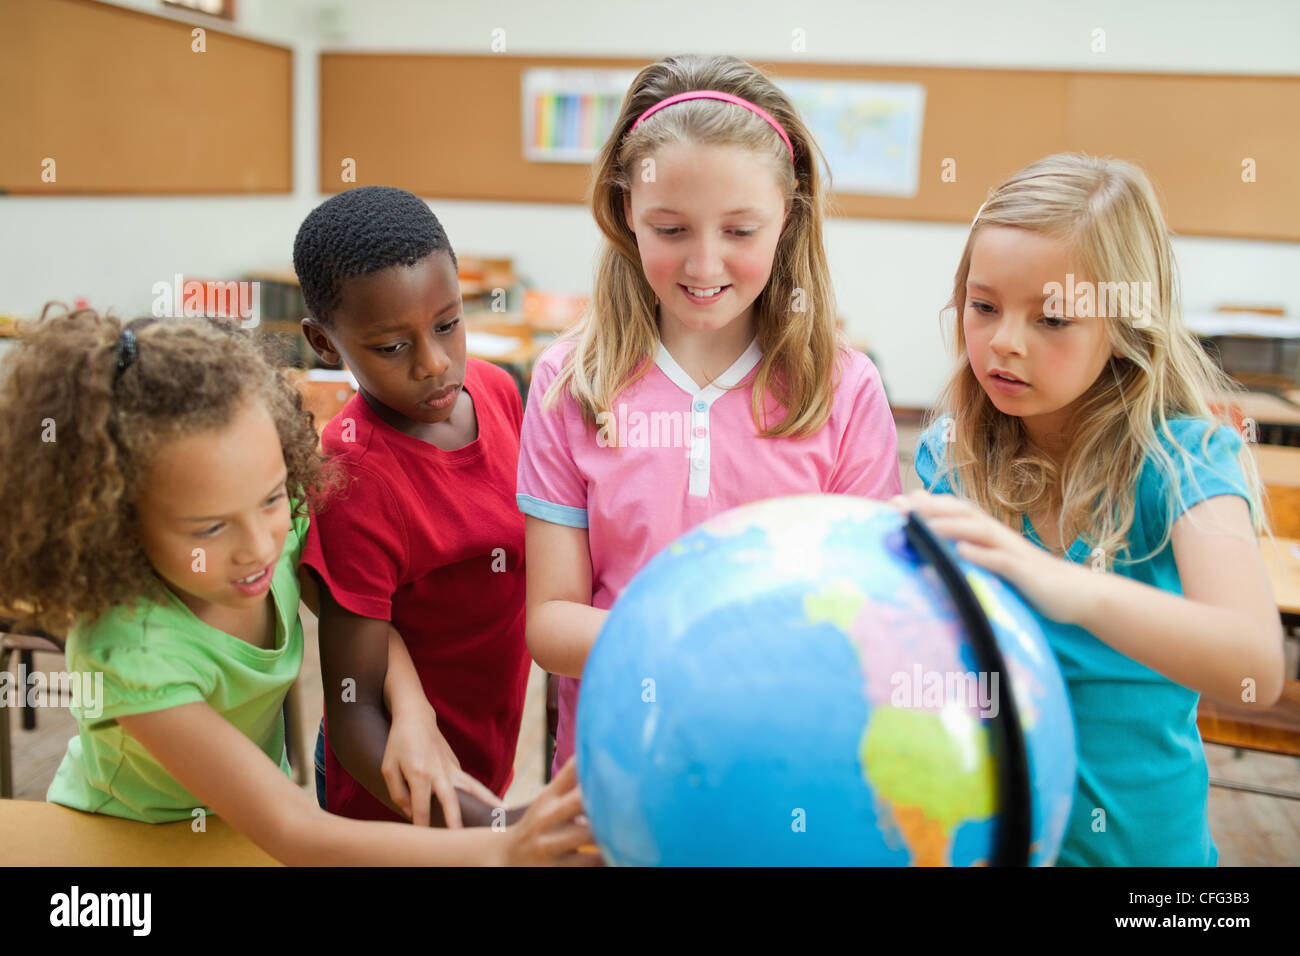 Students exploring globe together Stock Photo